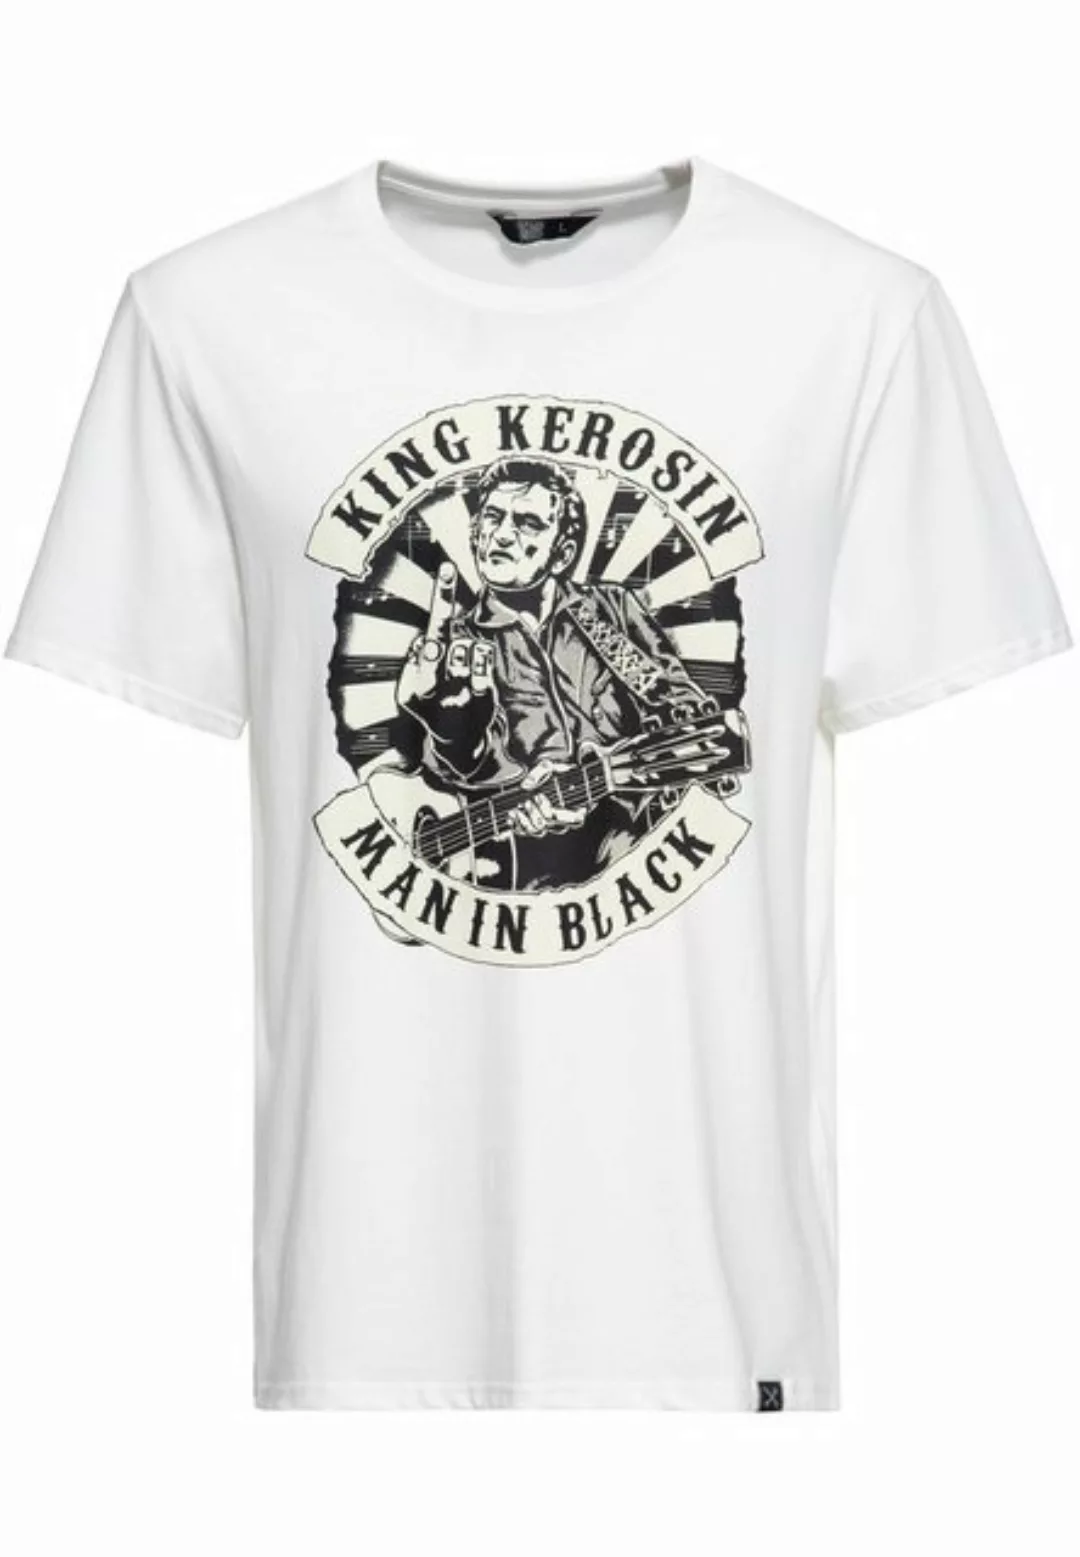 KingKerosin Print-Shirt MAN IN BLACK Artwork Print günstig online kaufen